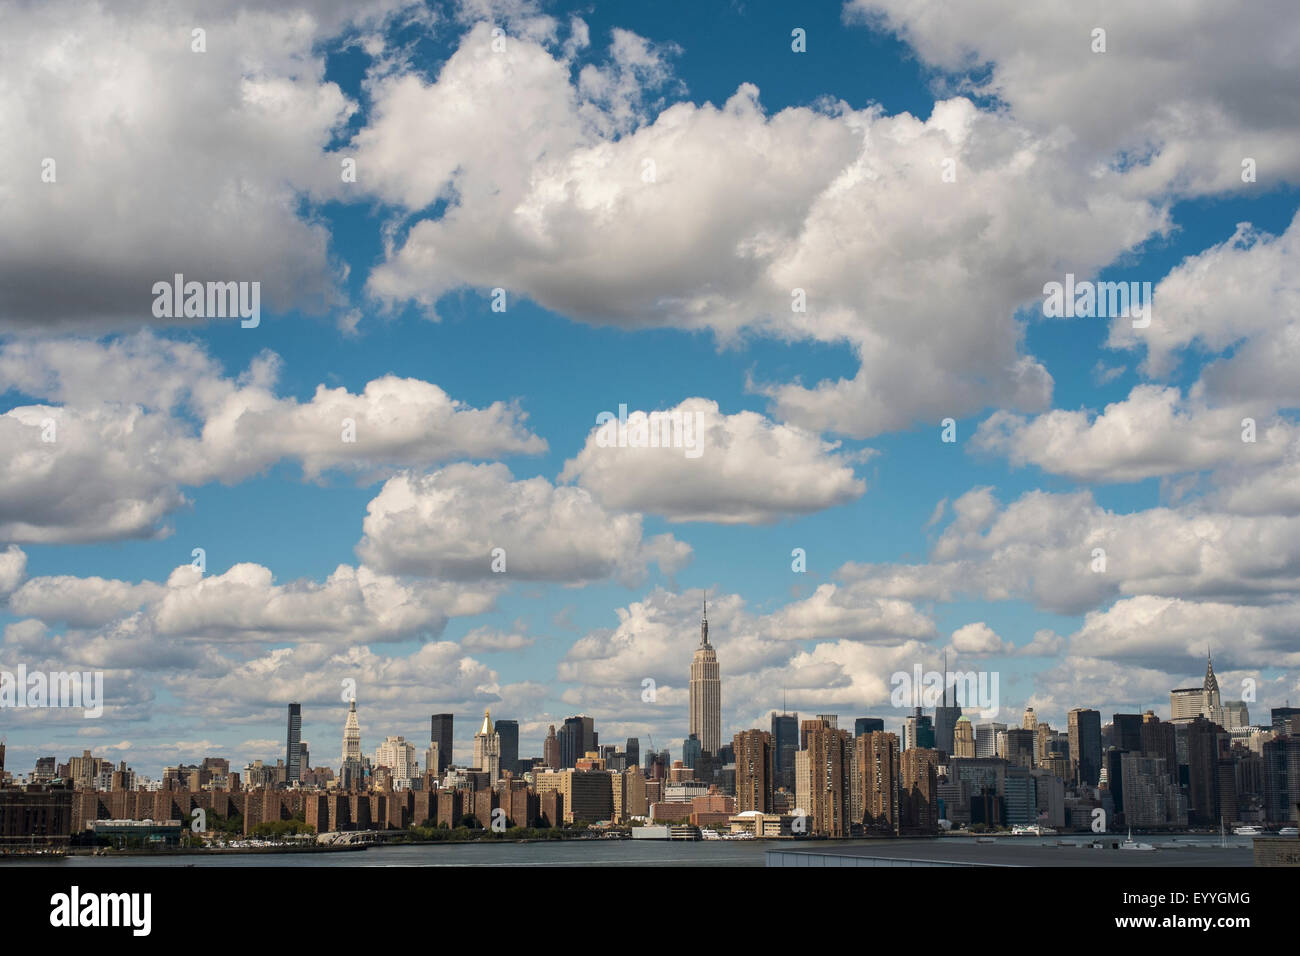 New York City skyline under cloudy blue sky, New York, United States Stock Photo